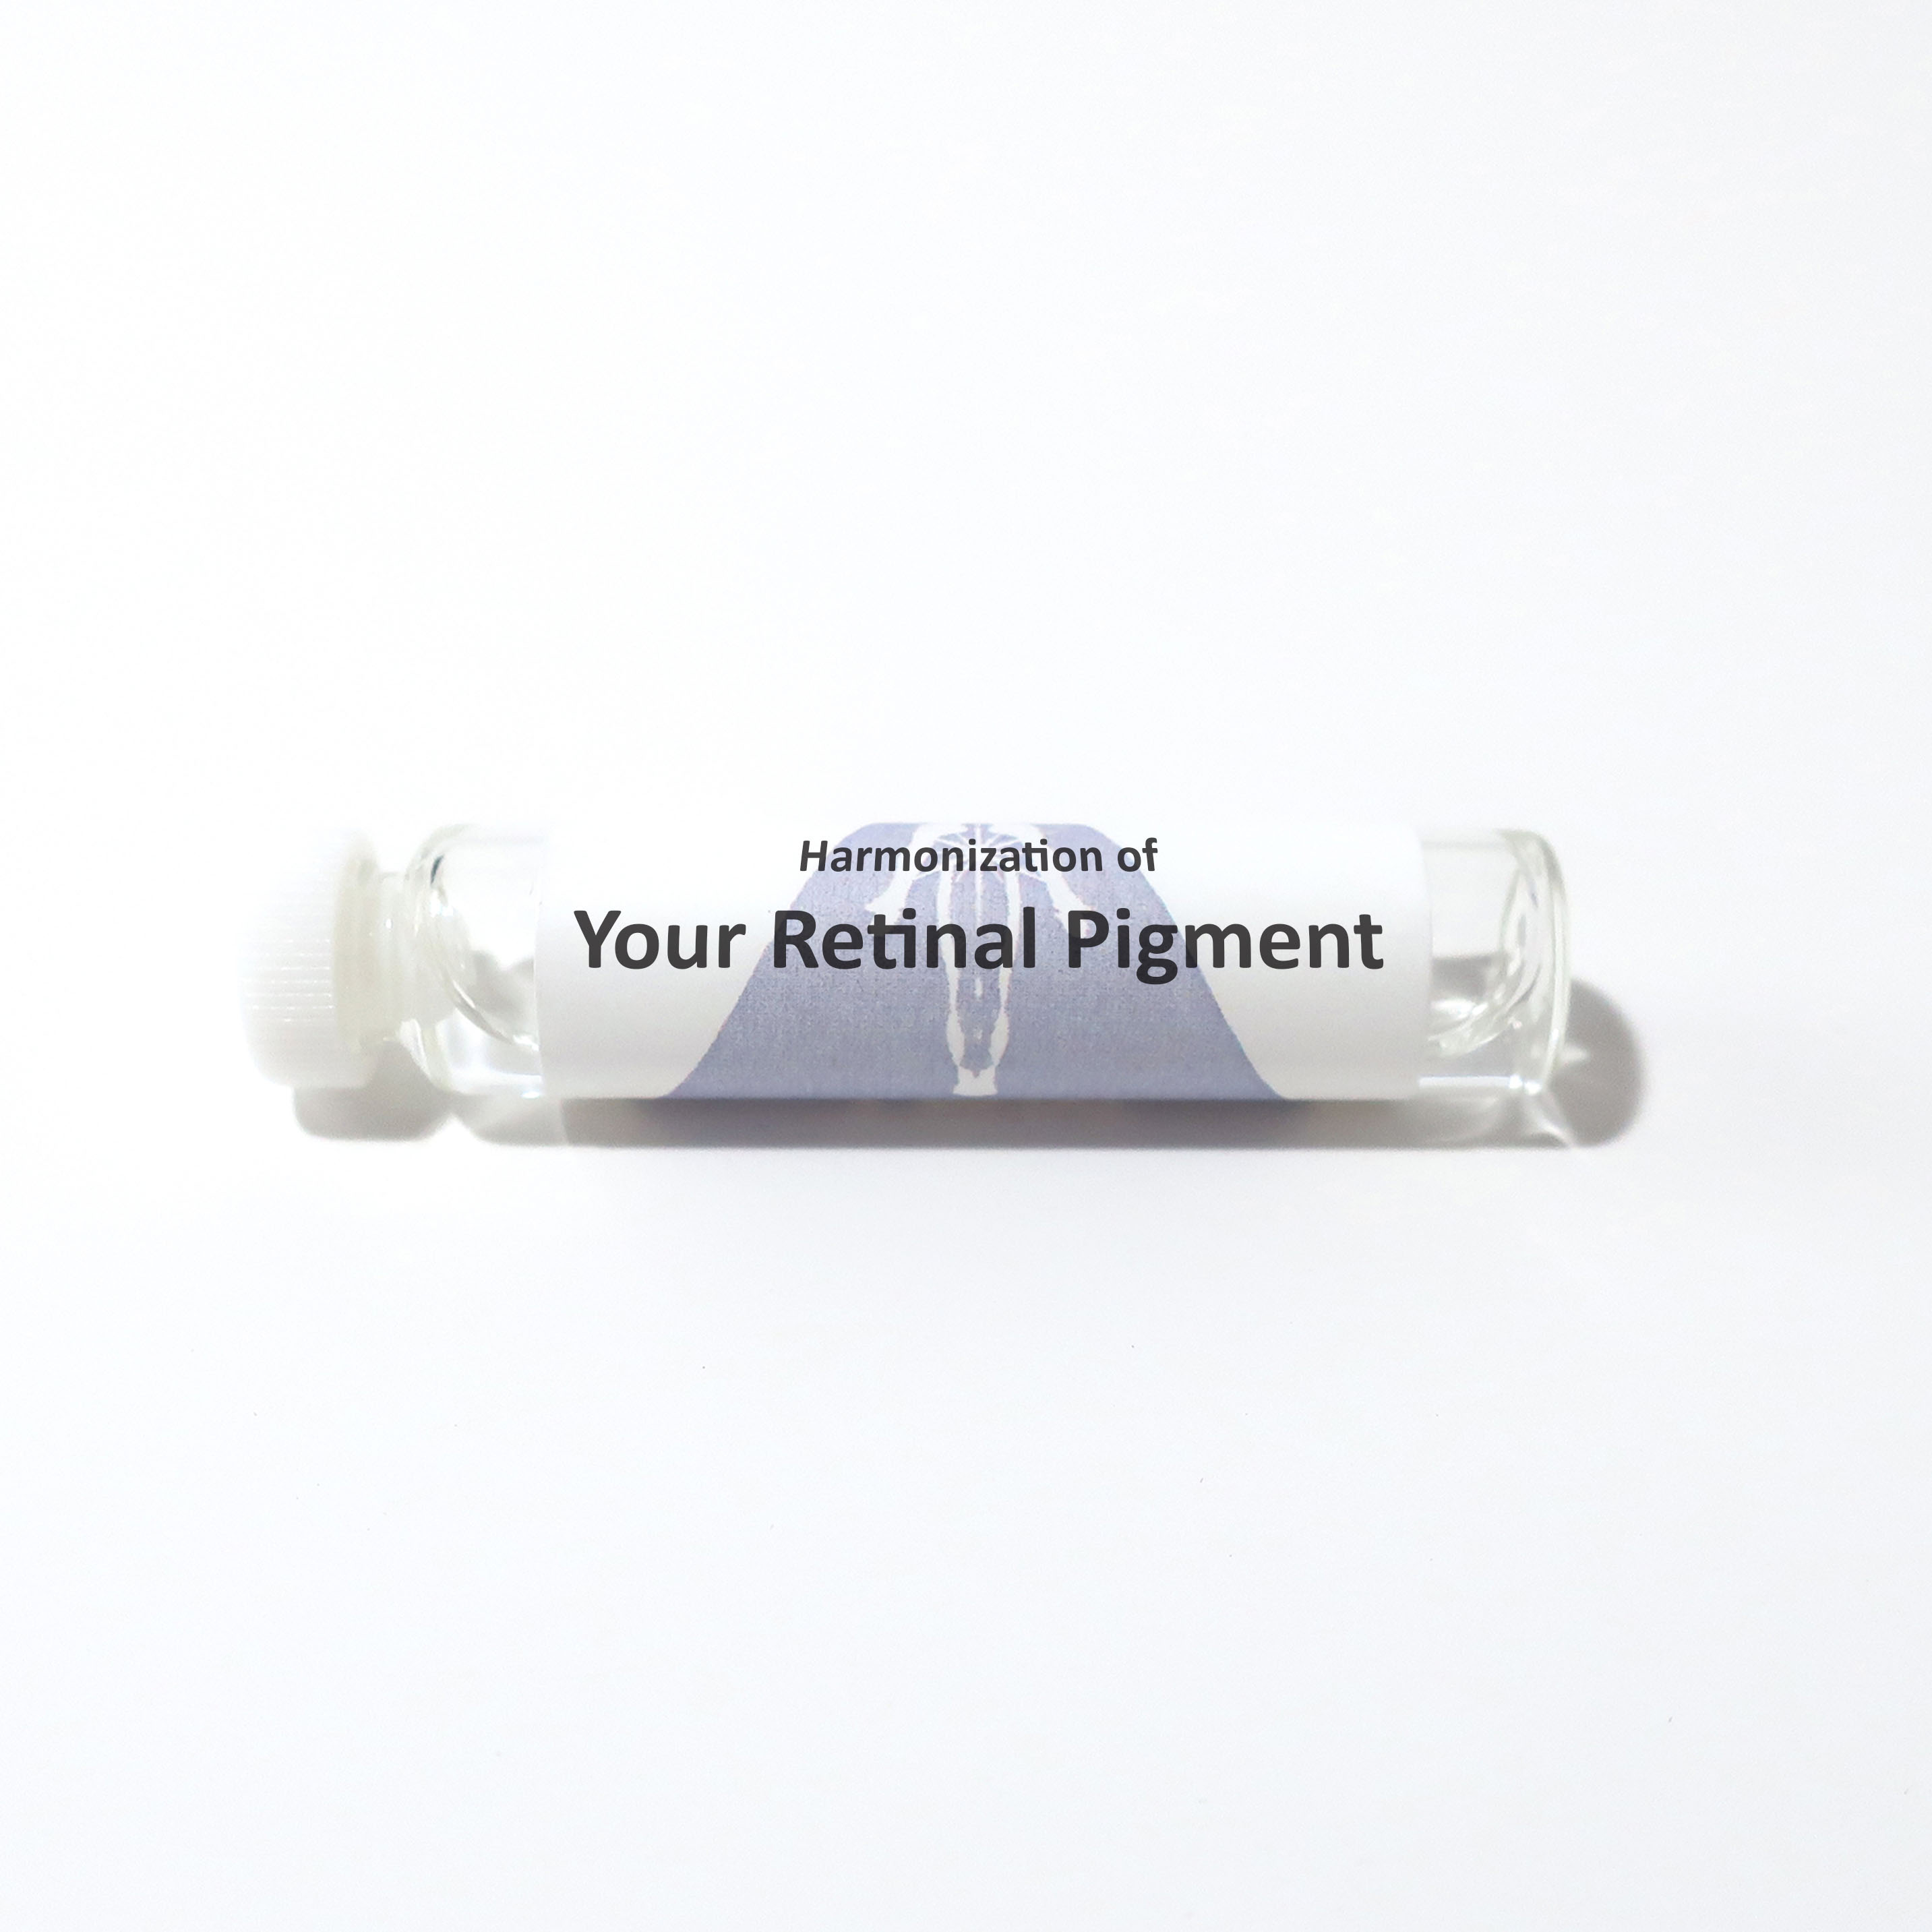 Your Retinal Pigment